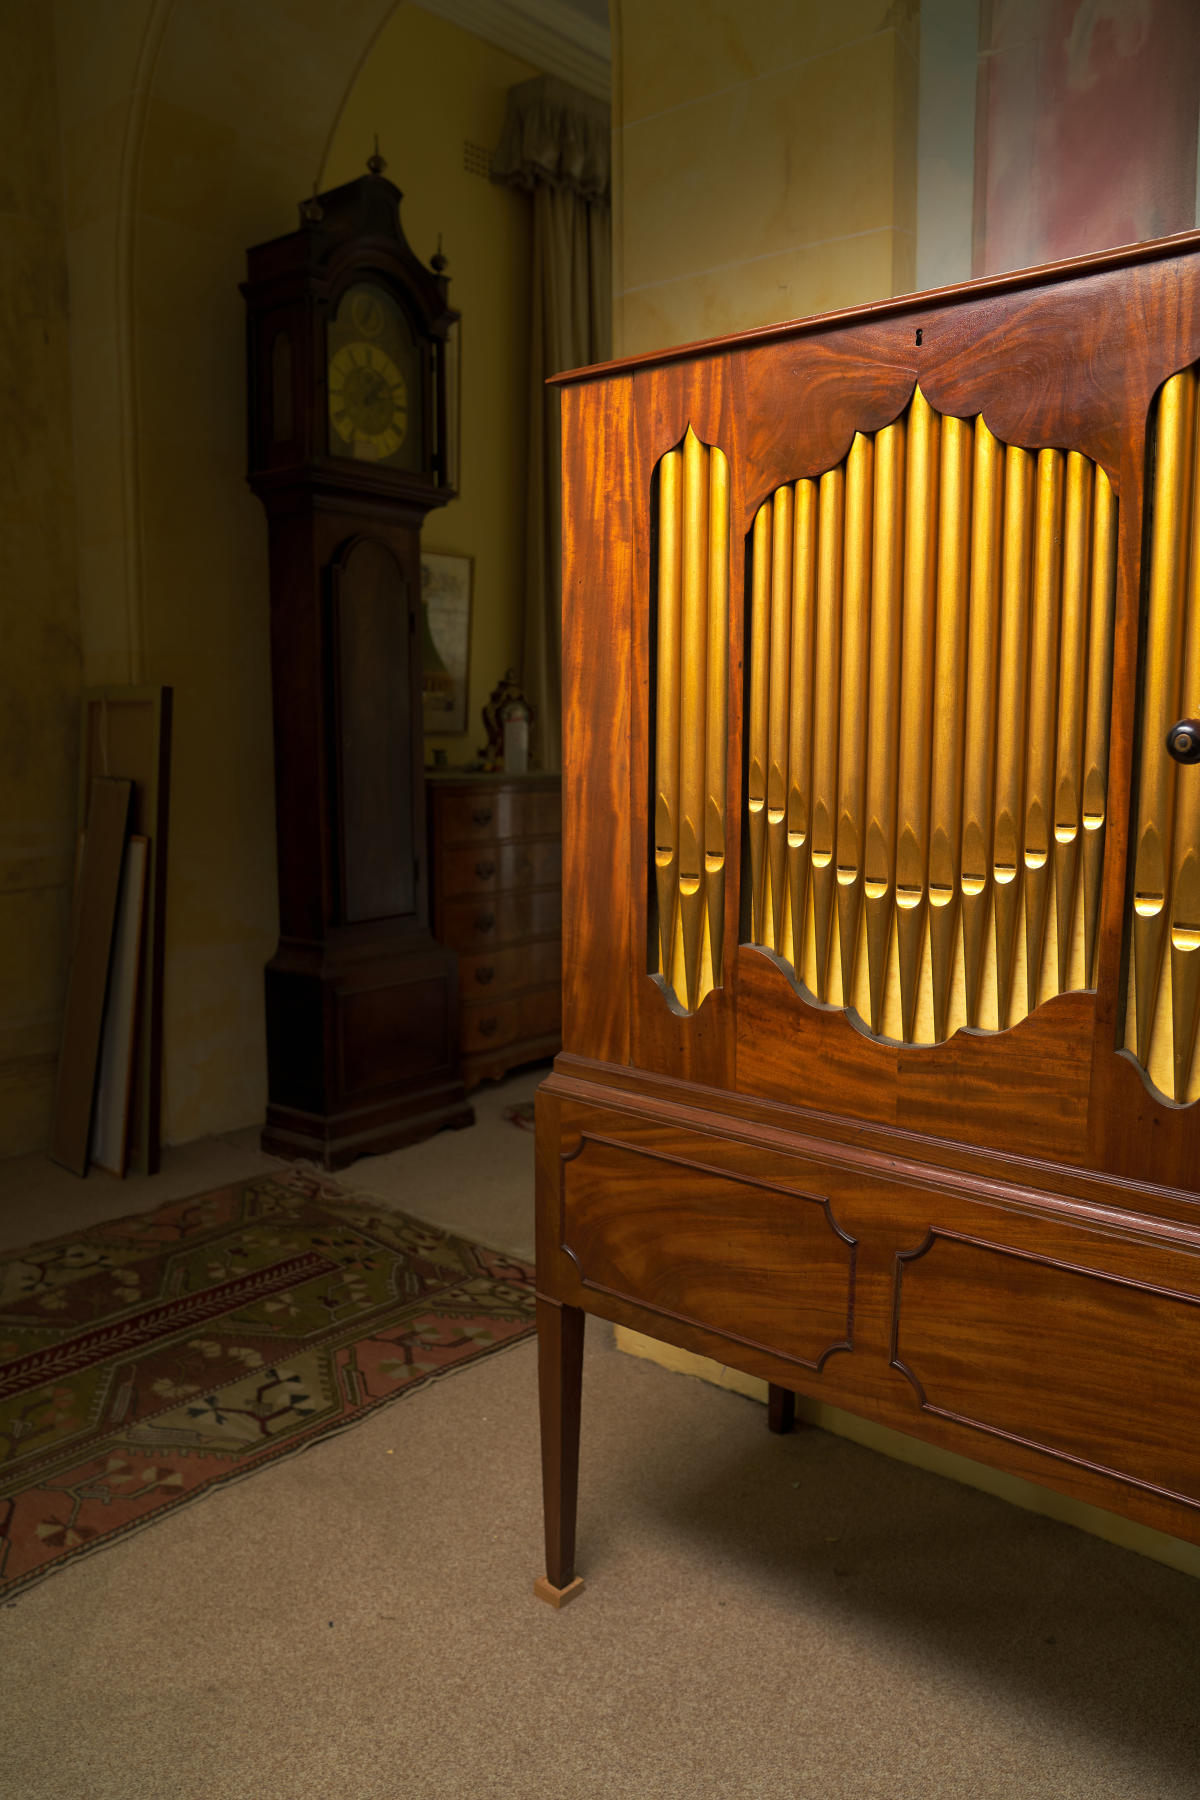 Barrel Organ, with thanks to David Pinnegar of Hammerwood House. Photo ©Patrick Harvey